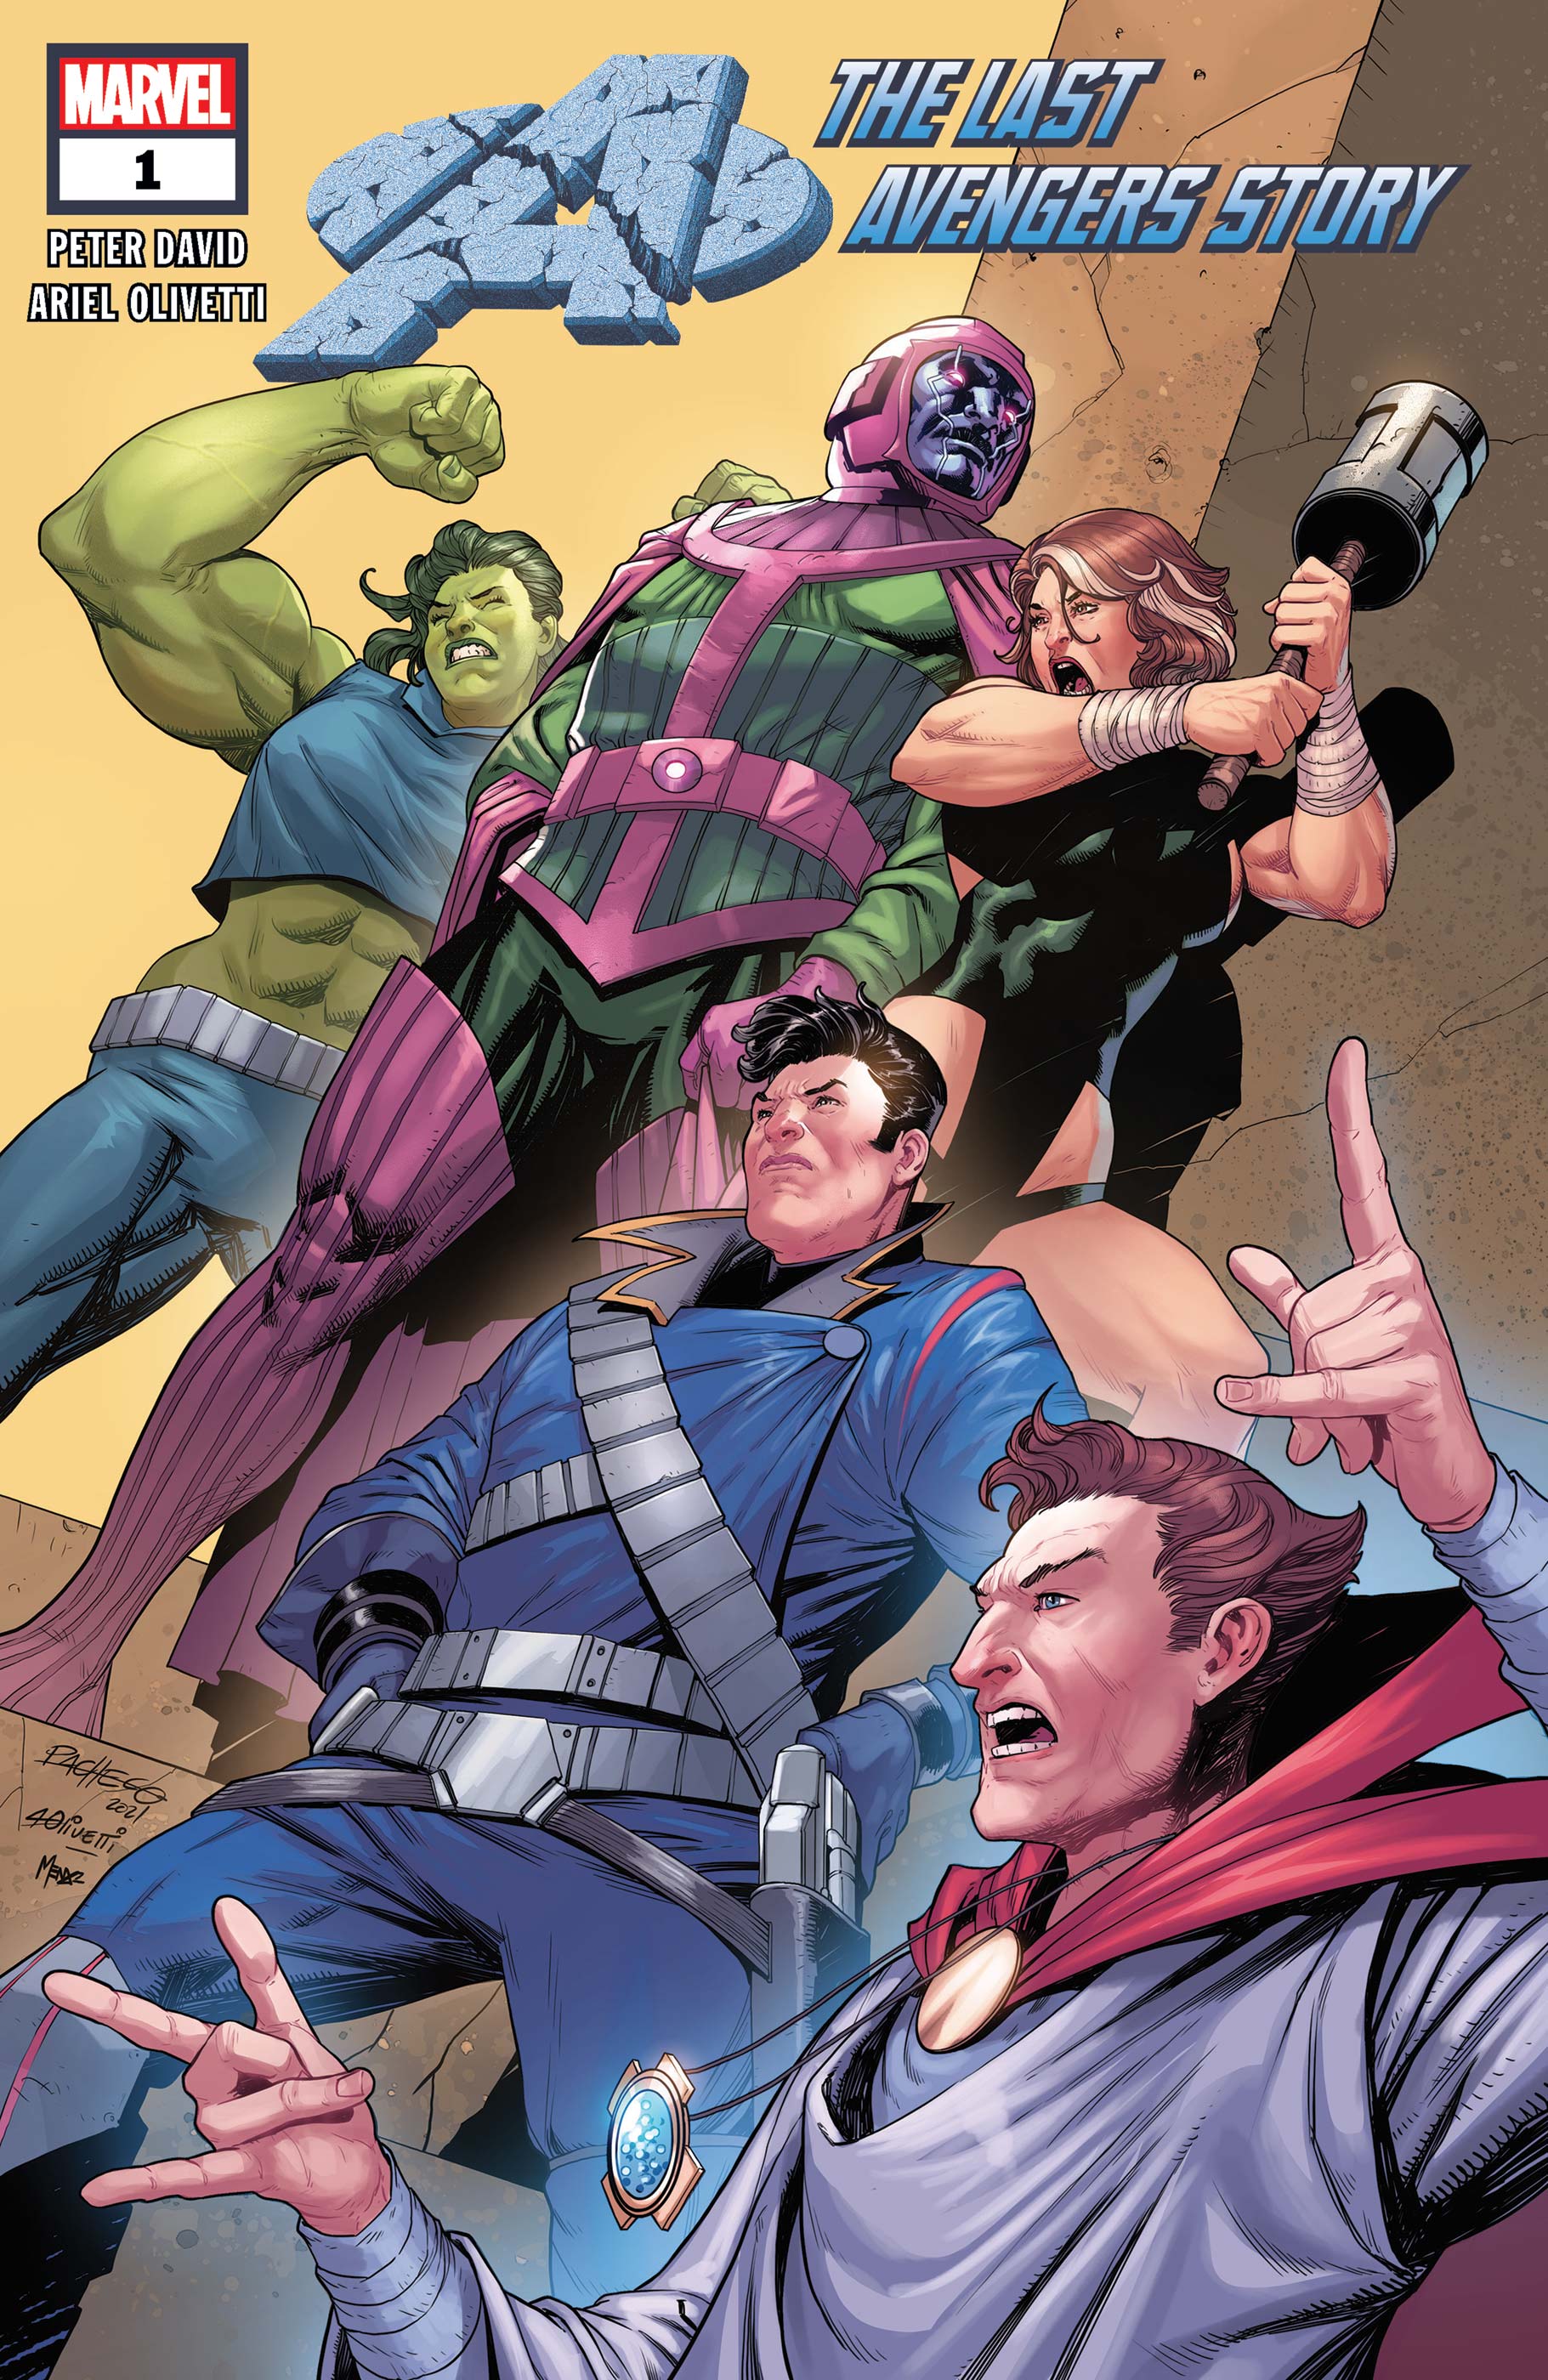 The Last Avengers Story: Marvel Tales (2021) #1